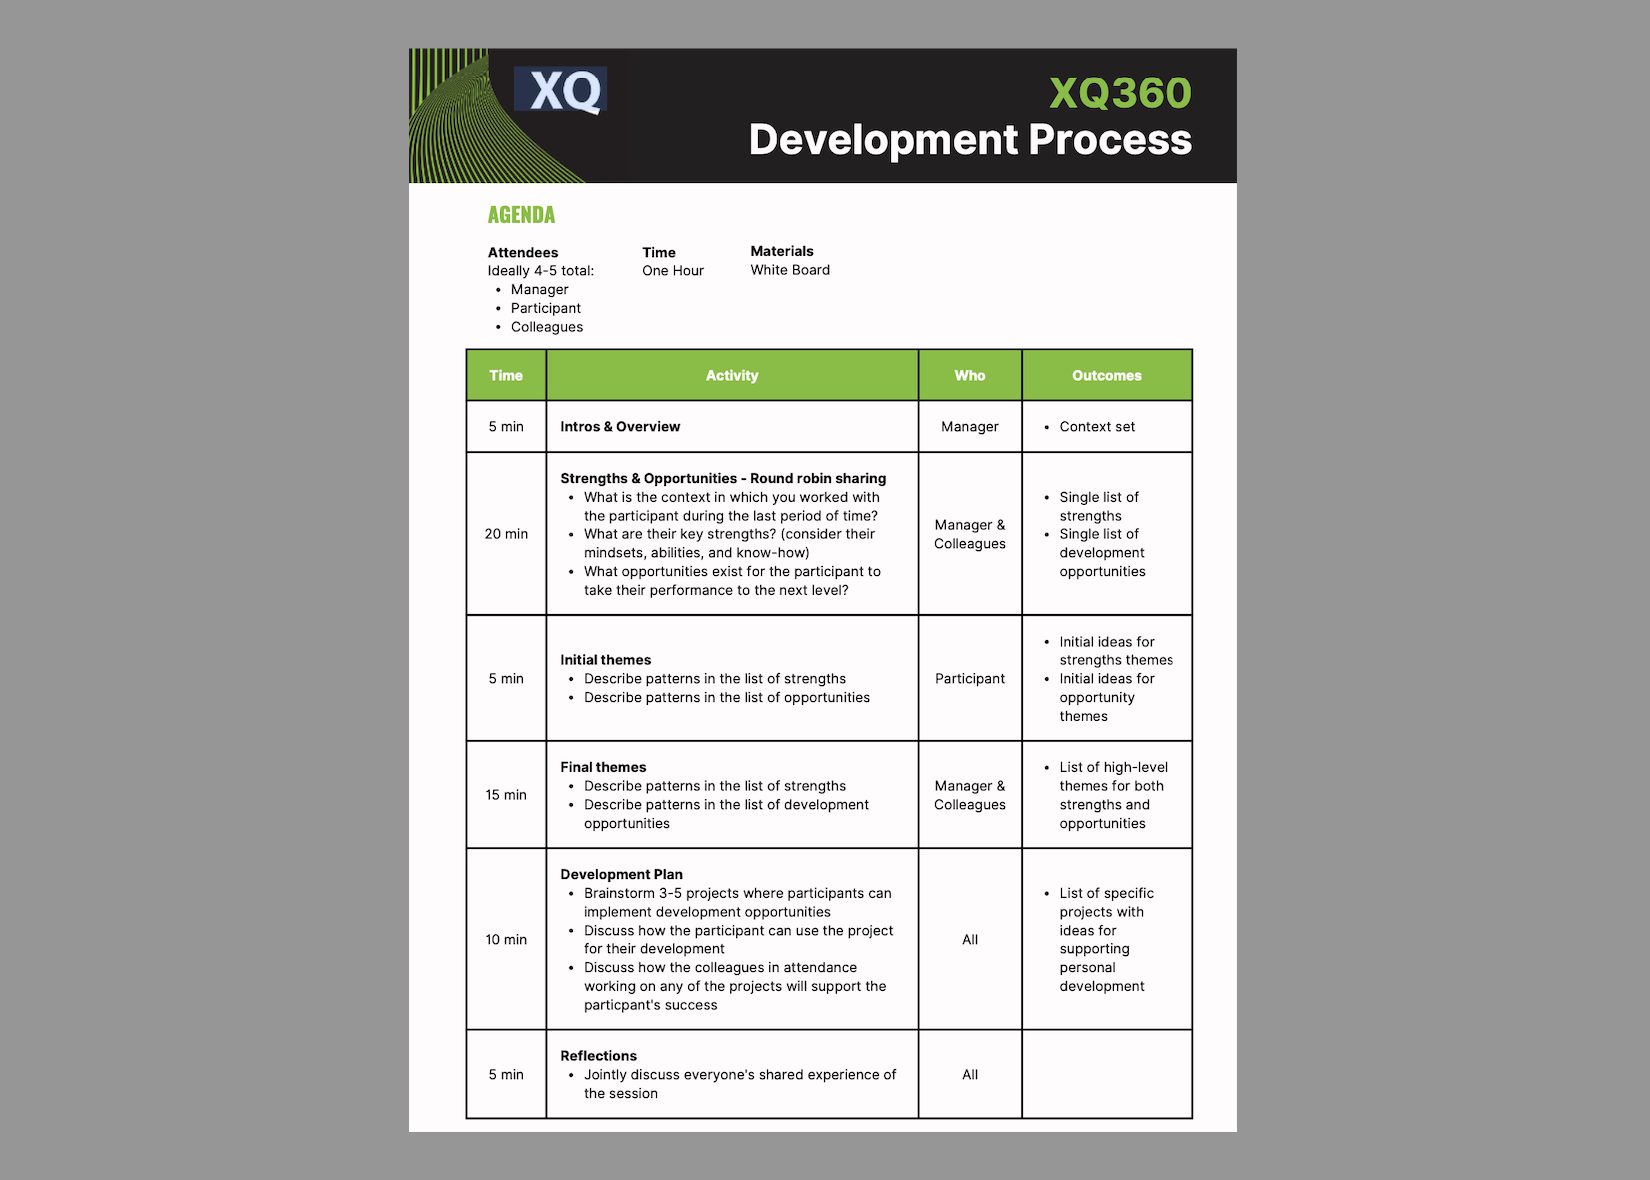 XQ360 Development Process